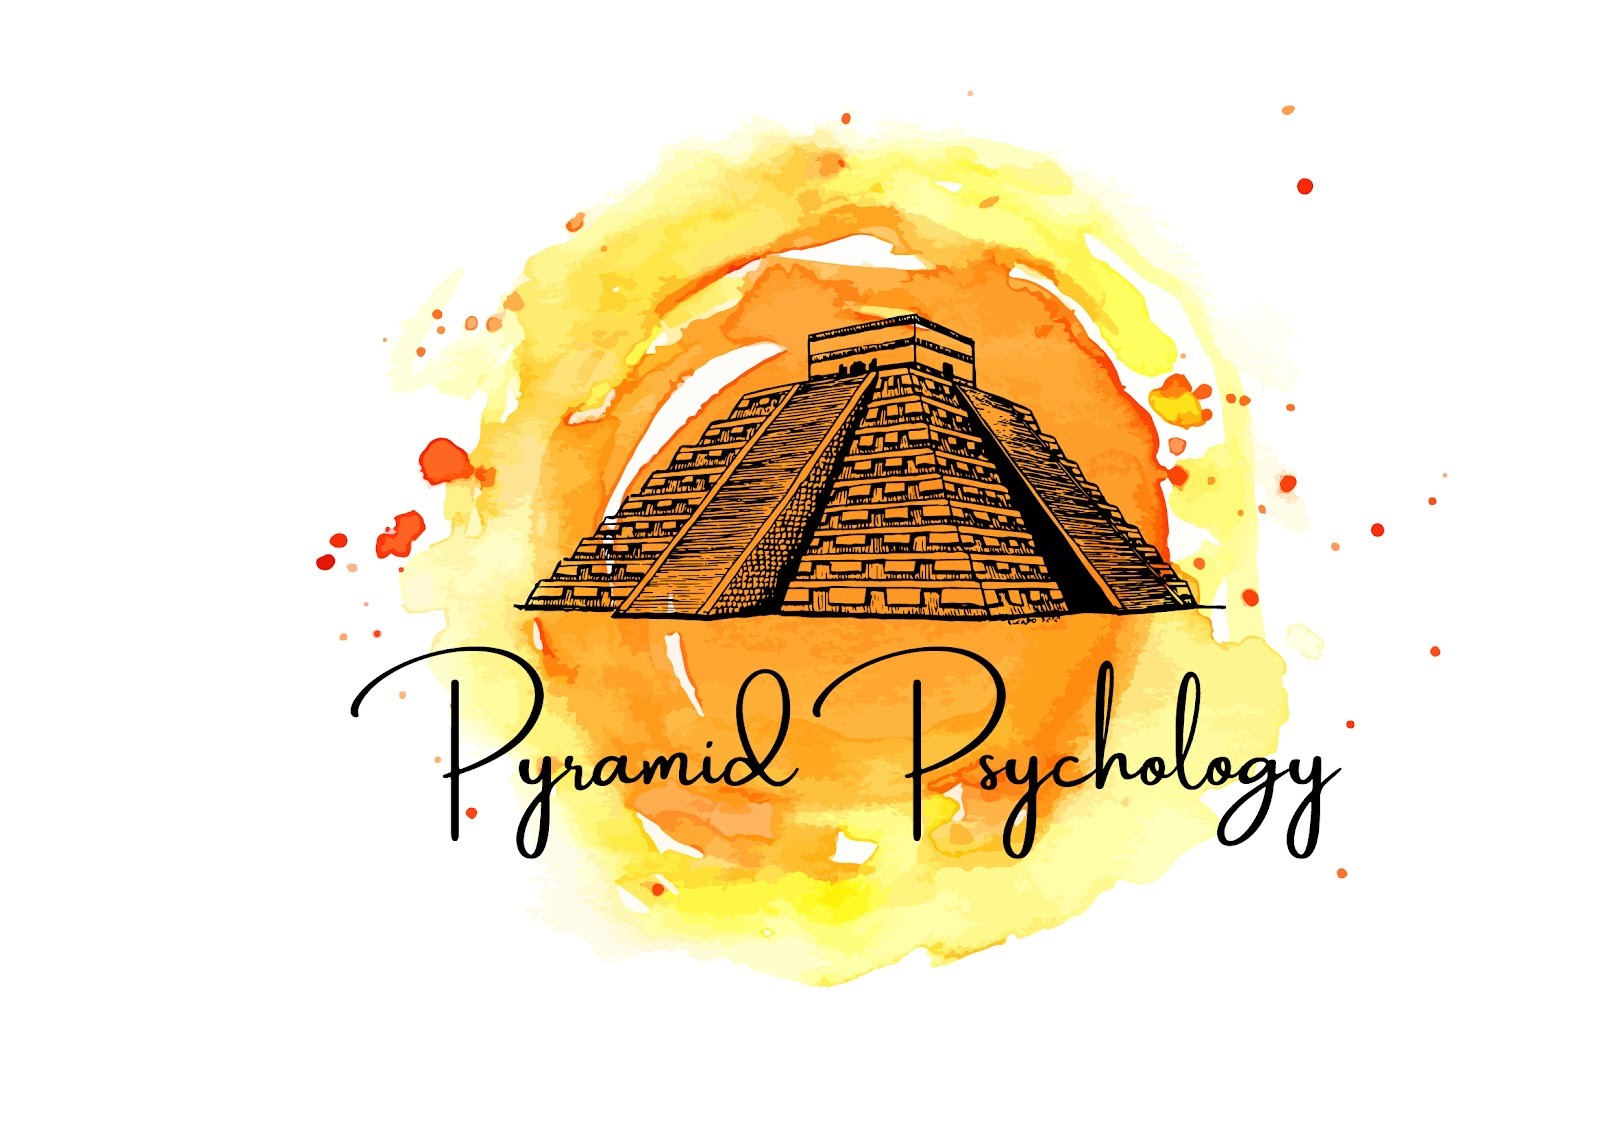 Pyramid Psycology